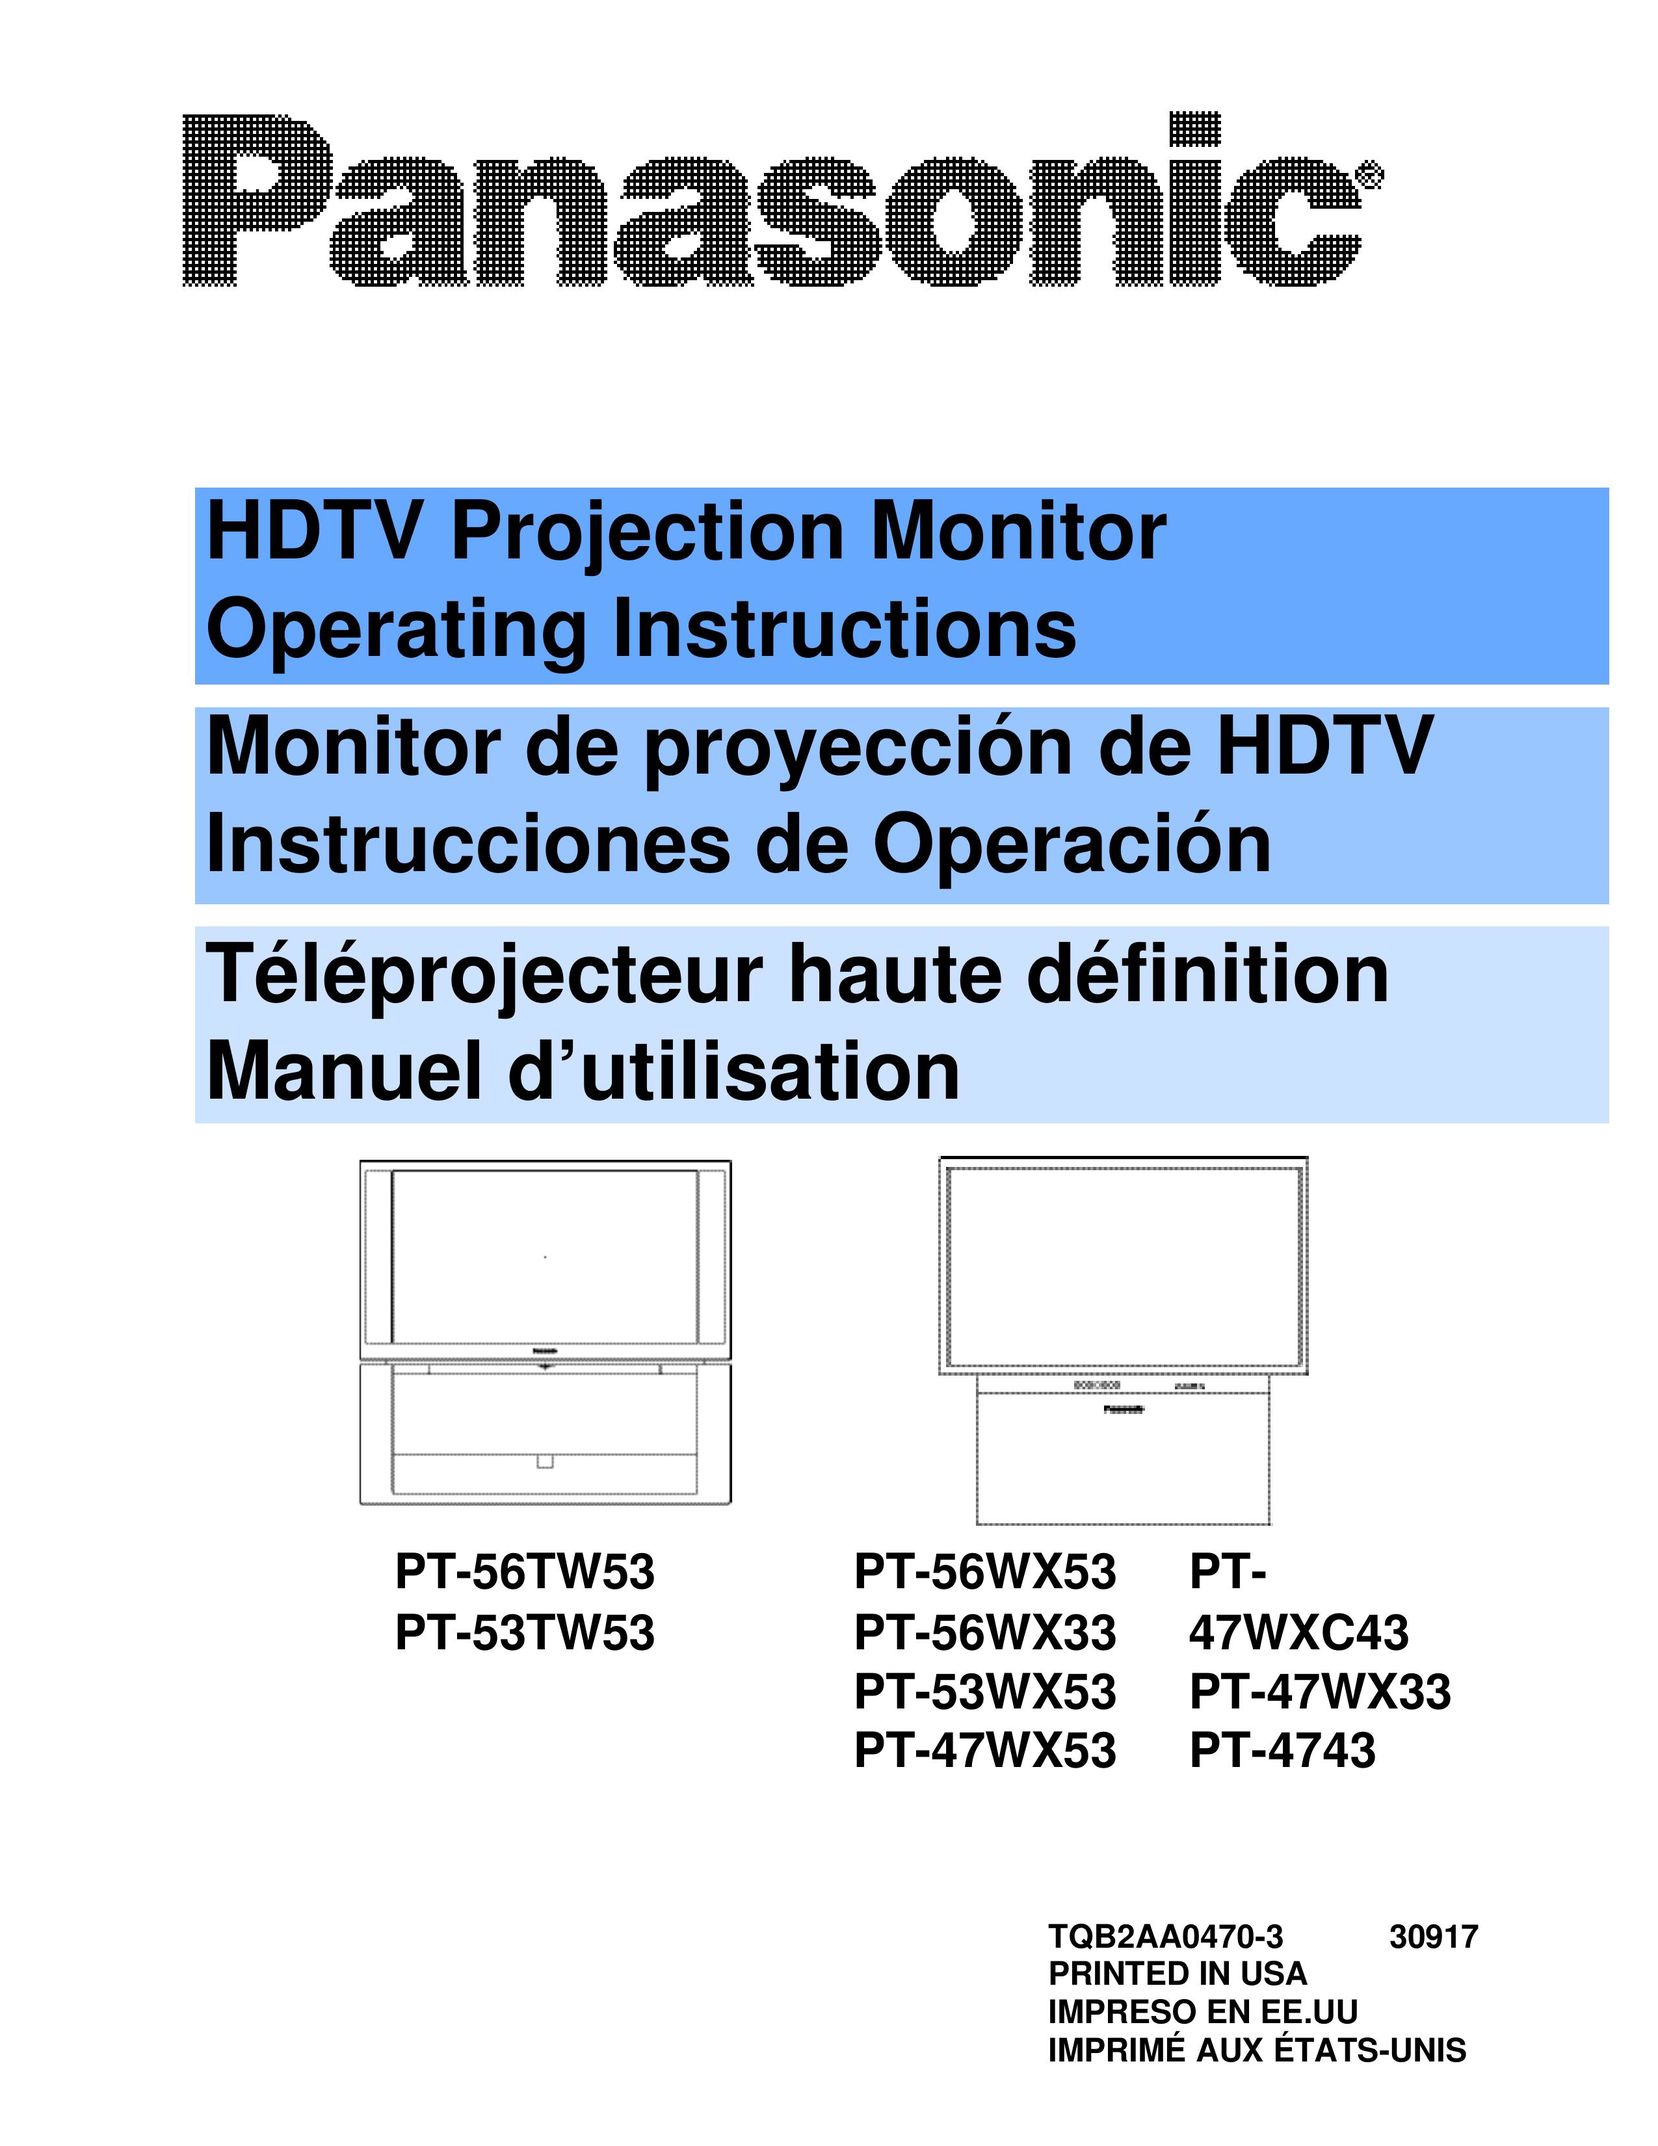 Panasonic PT-47WXC43 Home Theater System User Manual